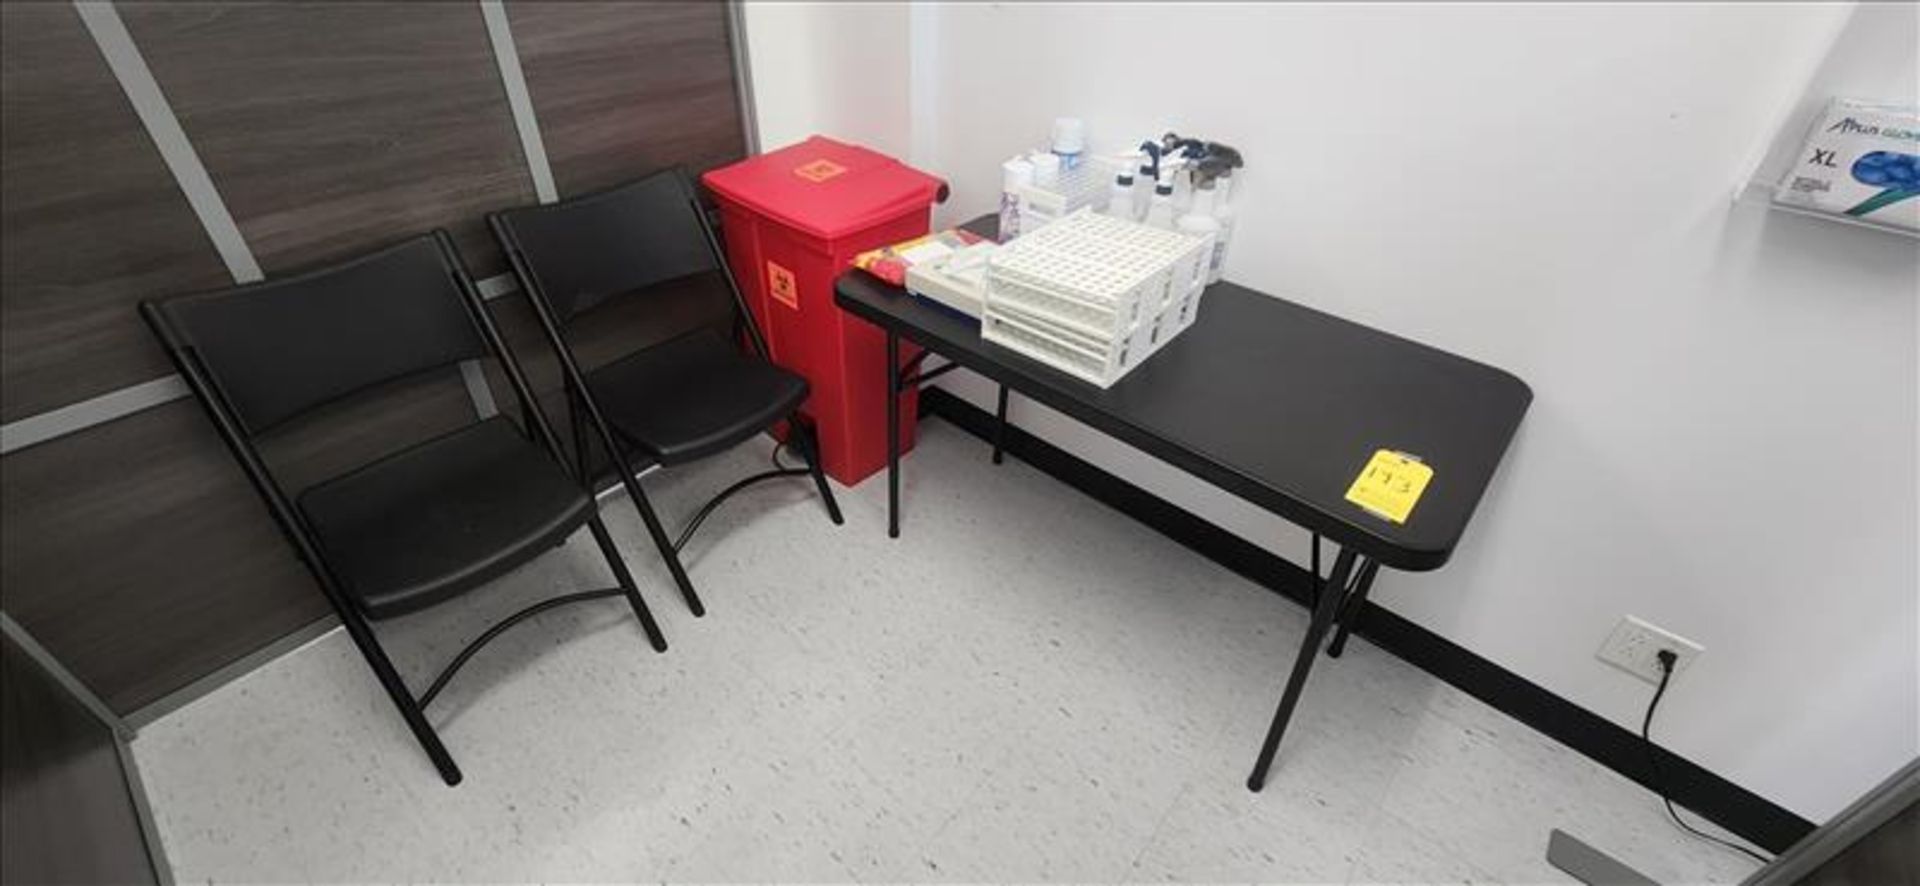 Treatment Room Suite: Table, 2 Chairs, Biohazard Disposal Bin